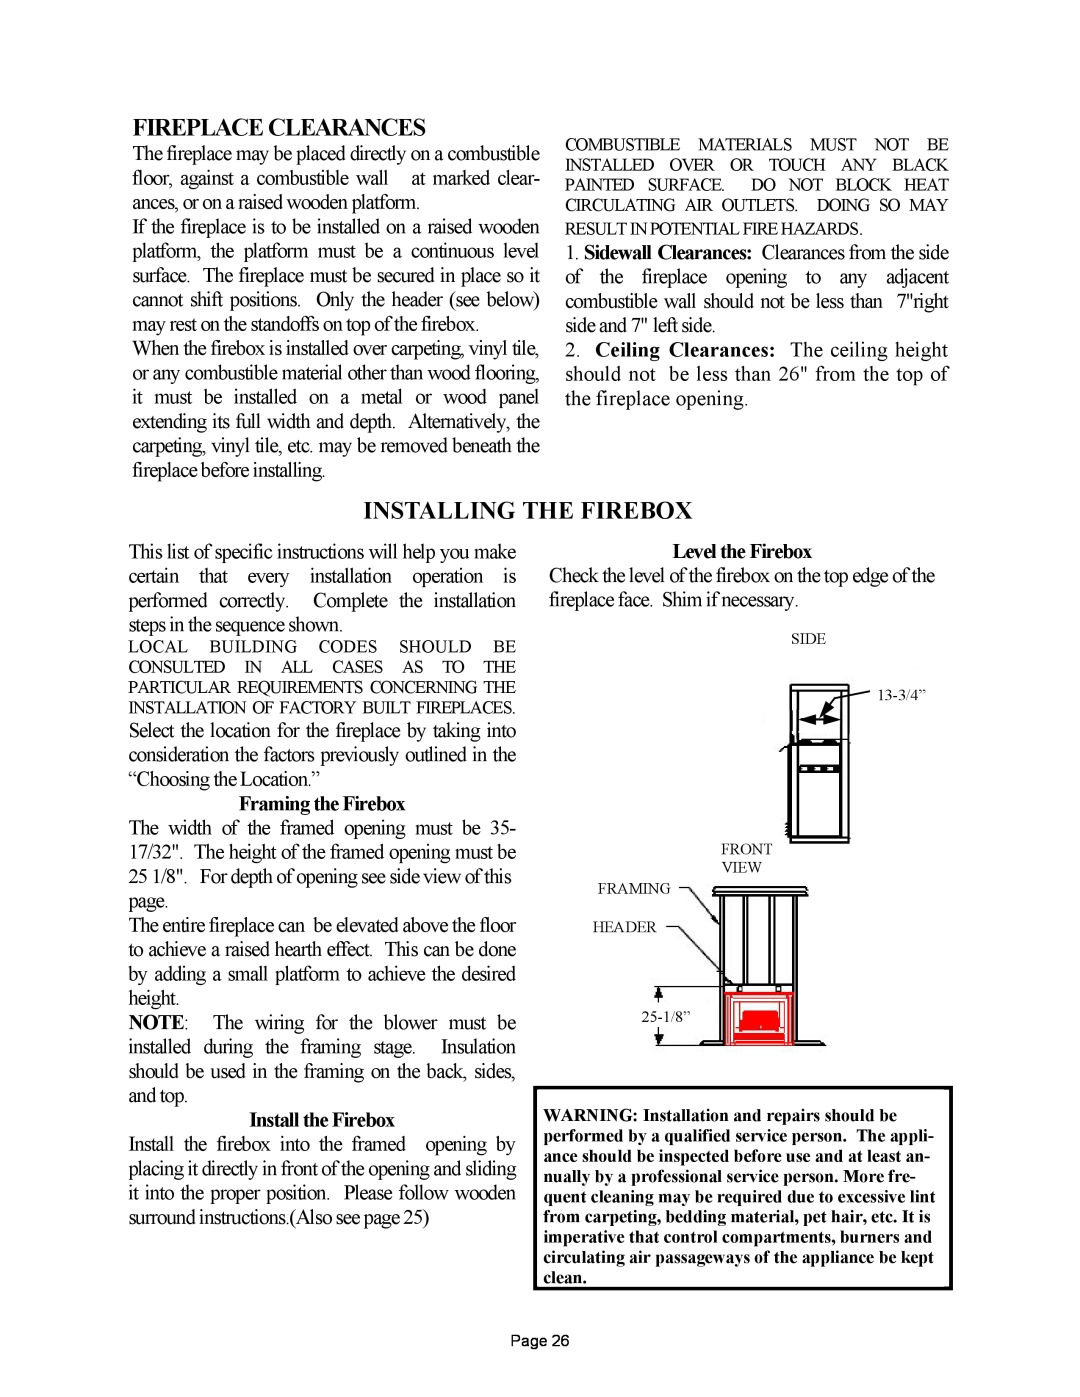 New Buck Corporation 384 manual Fireplace Clearances, Installing The Firebox, Framing the Firebox, Install the Firebox 